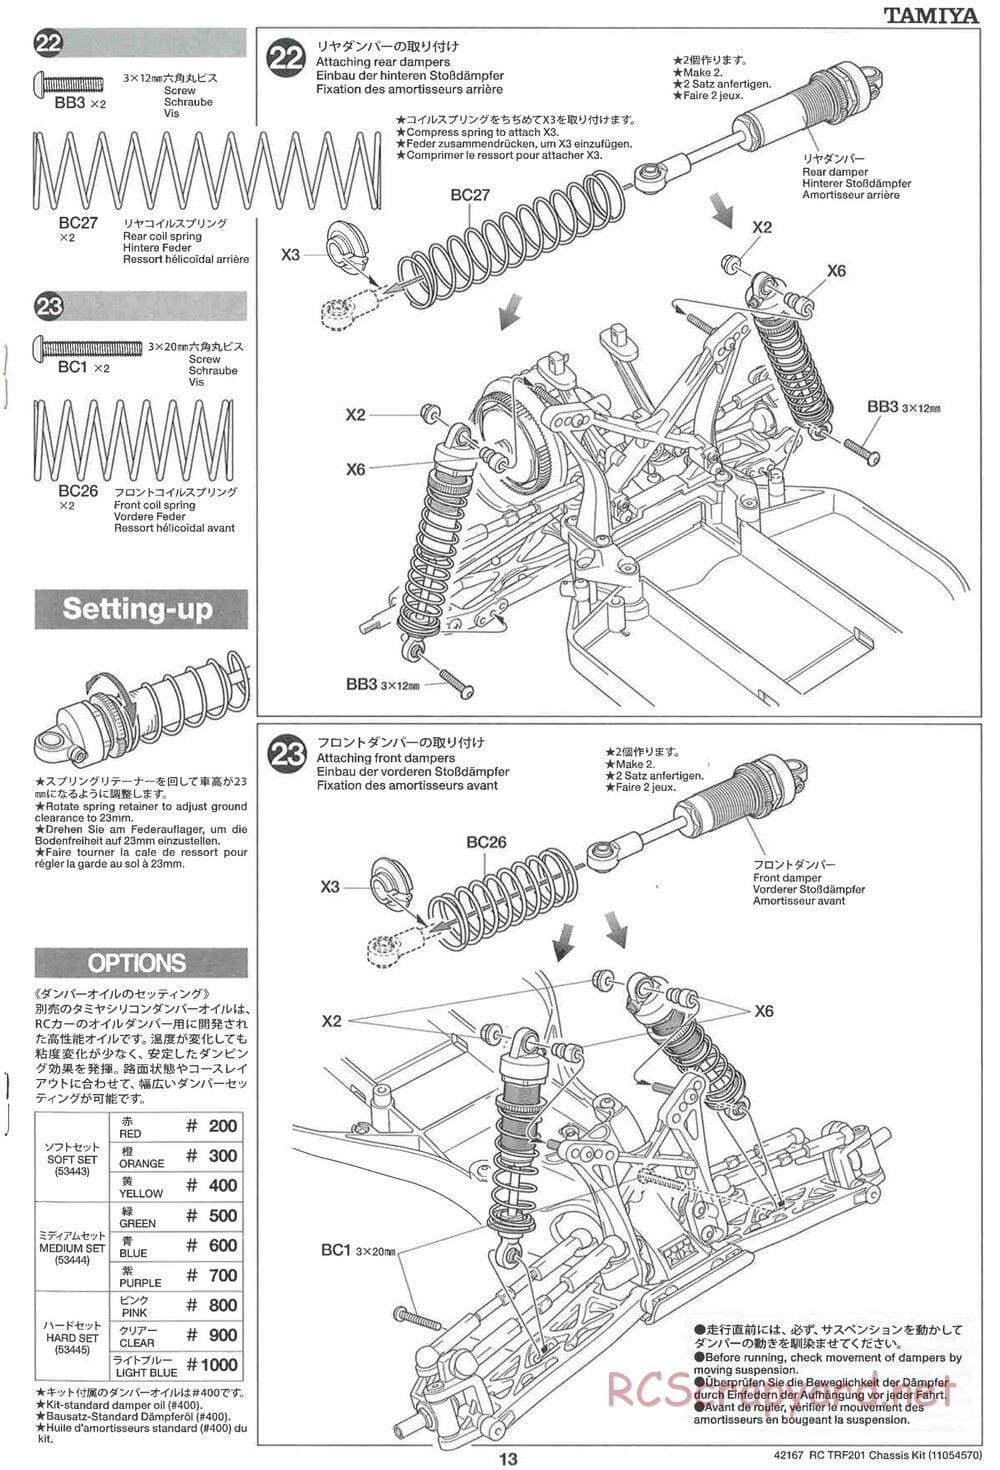 Tamiya - TRF201 Chassis - Manual - Page 13